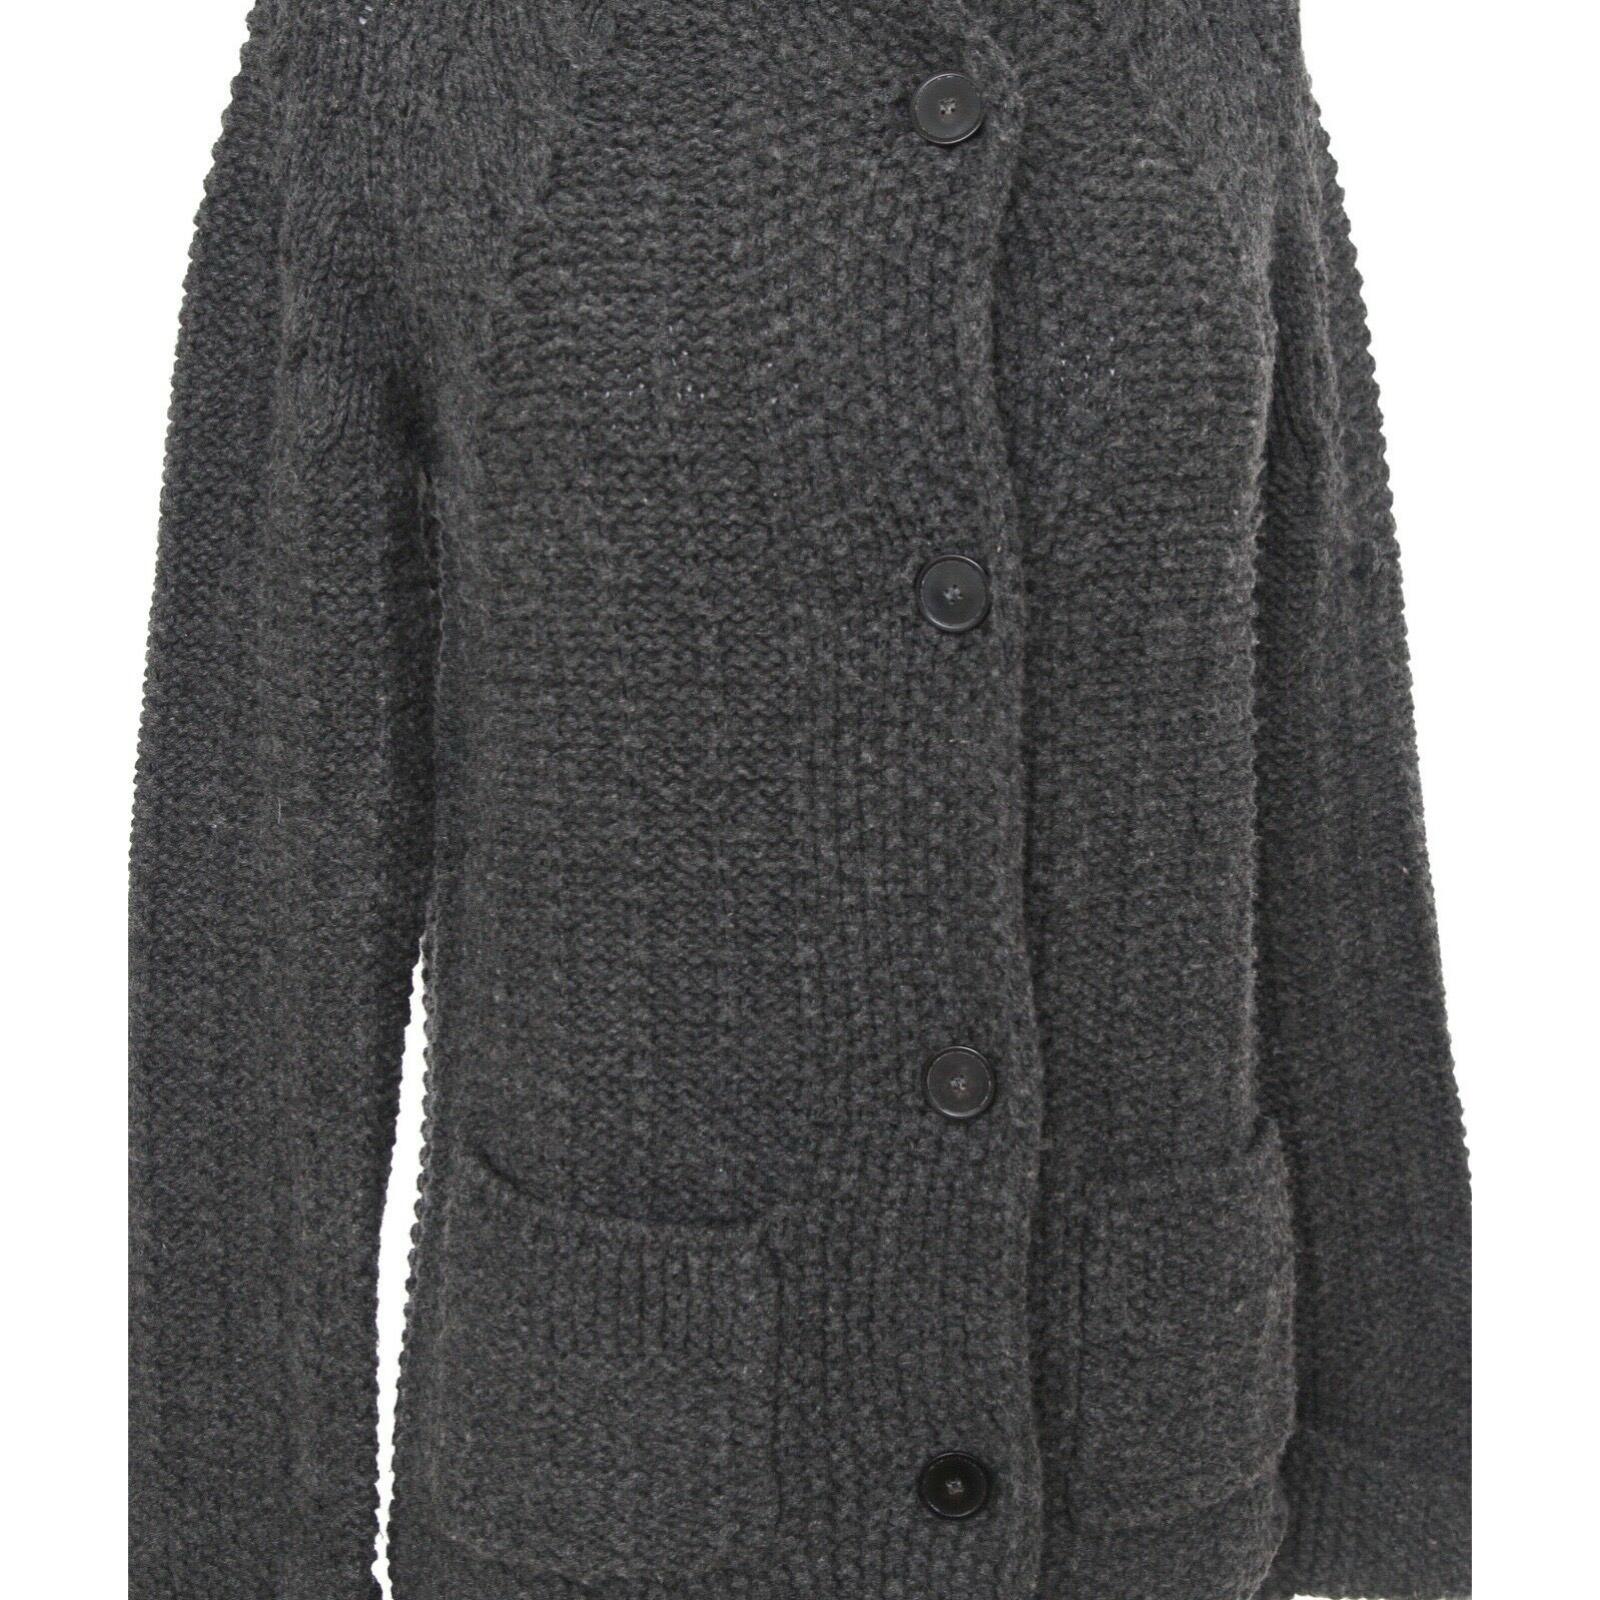 Women's CHLOE Sweater Cardigan Knit Jacket CHARCOAL GREY Long Sleeve Sz XS 2011 For Sale